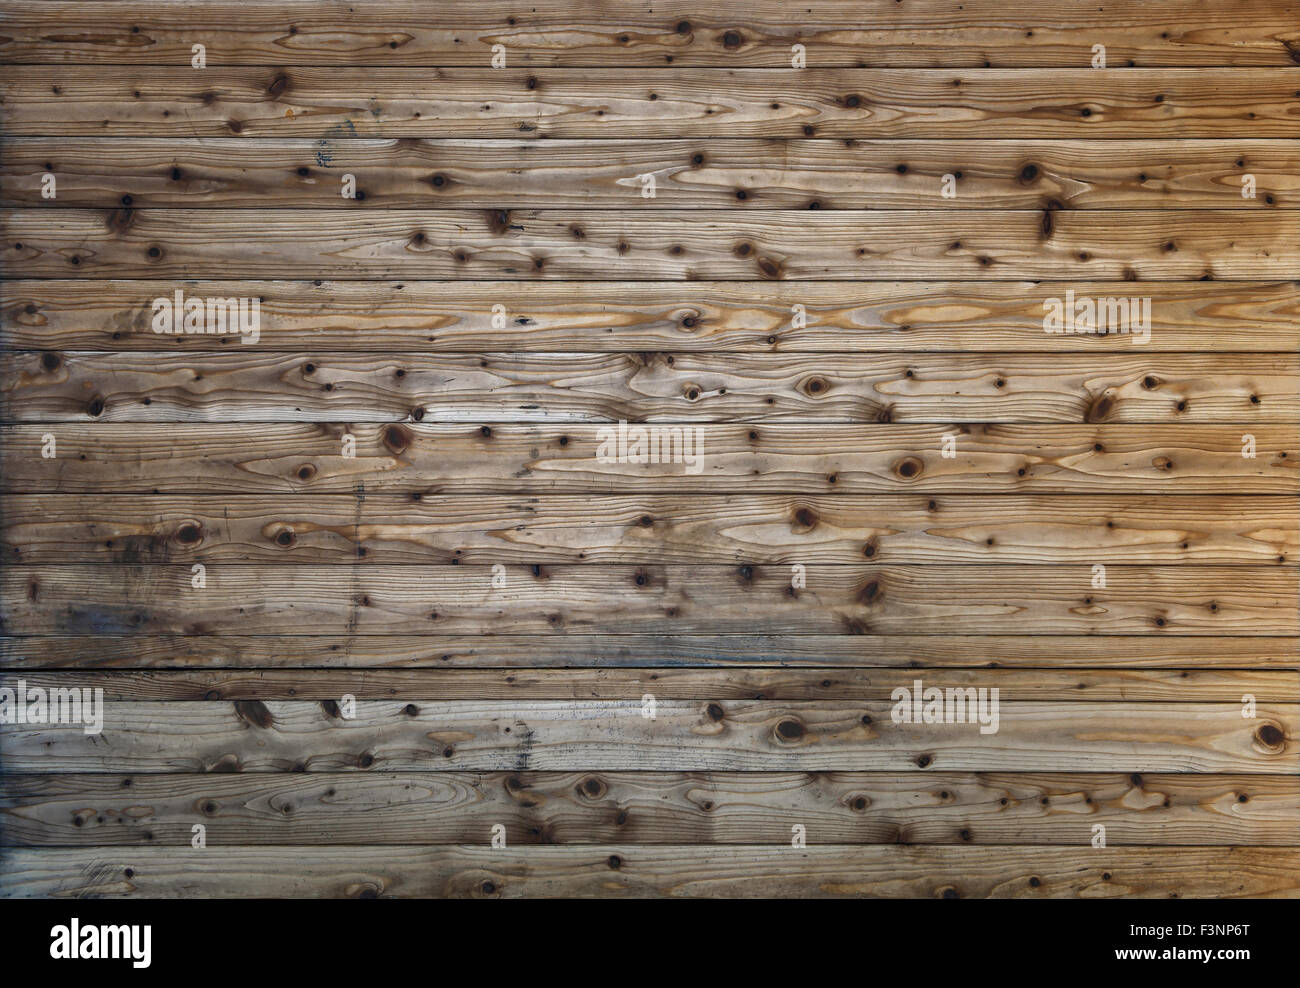 Vintage Holzplatte Hintergrund. Wohnhaft rustikale Kulisse. Tapete-Textur Stockfoto